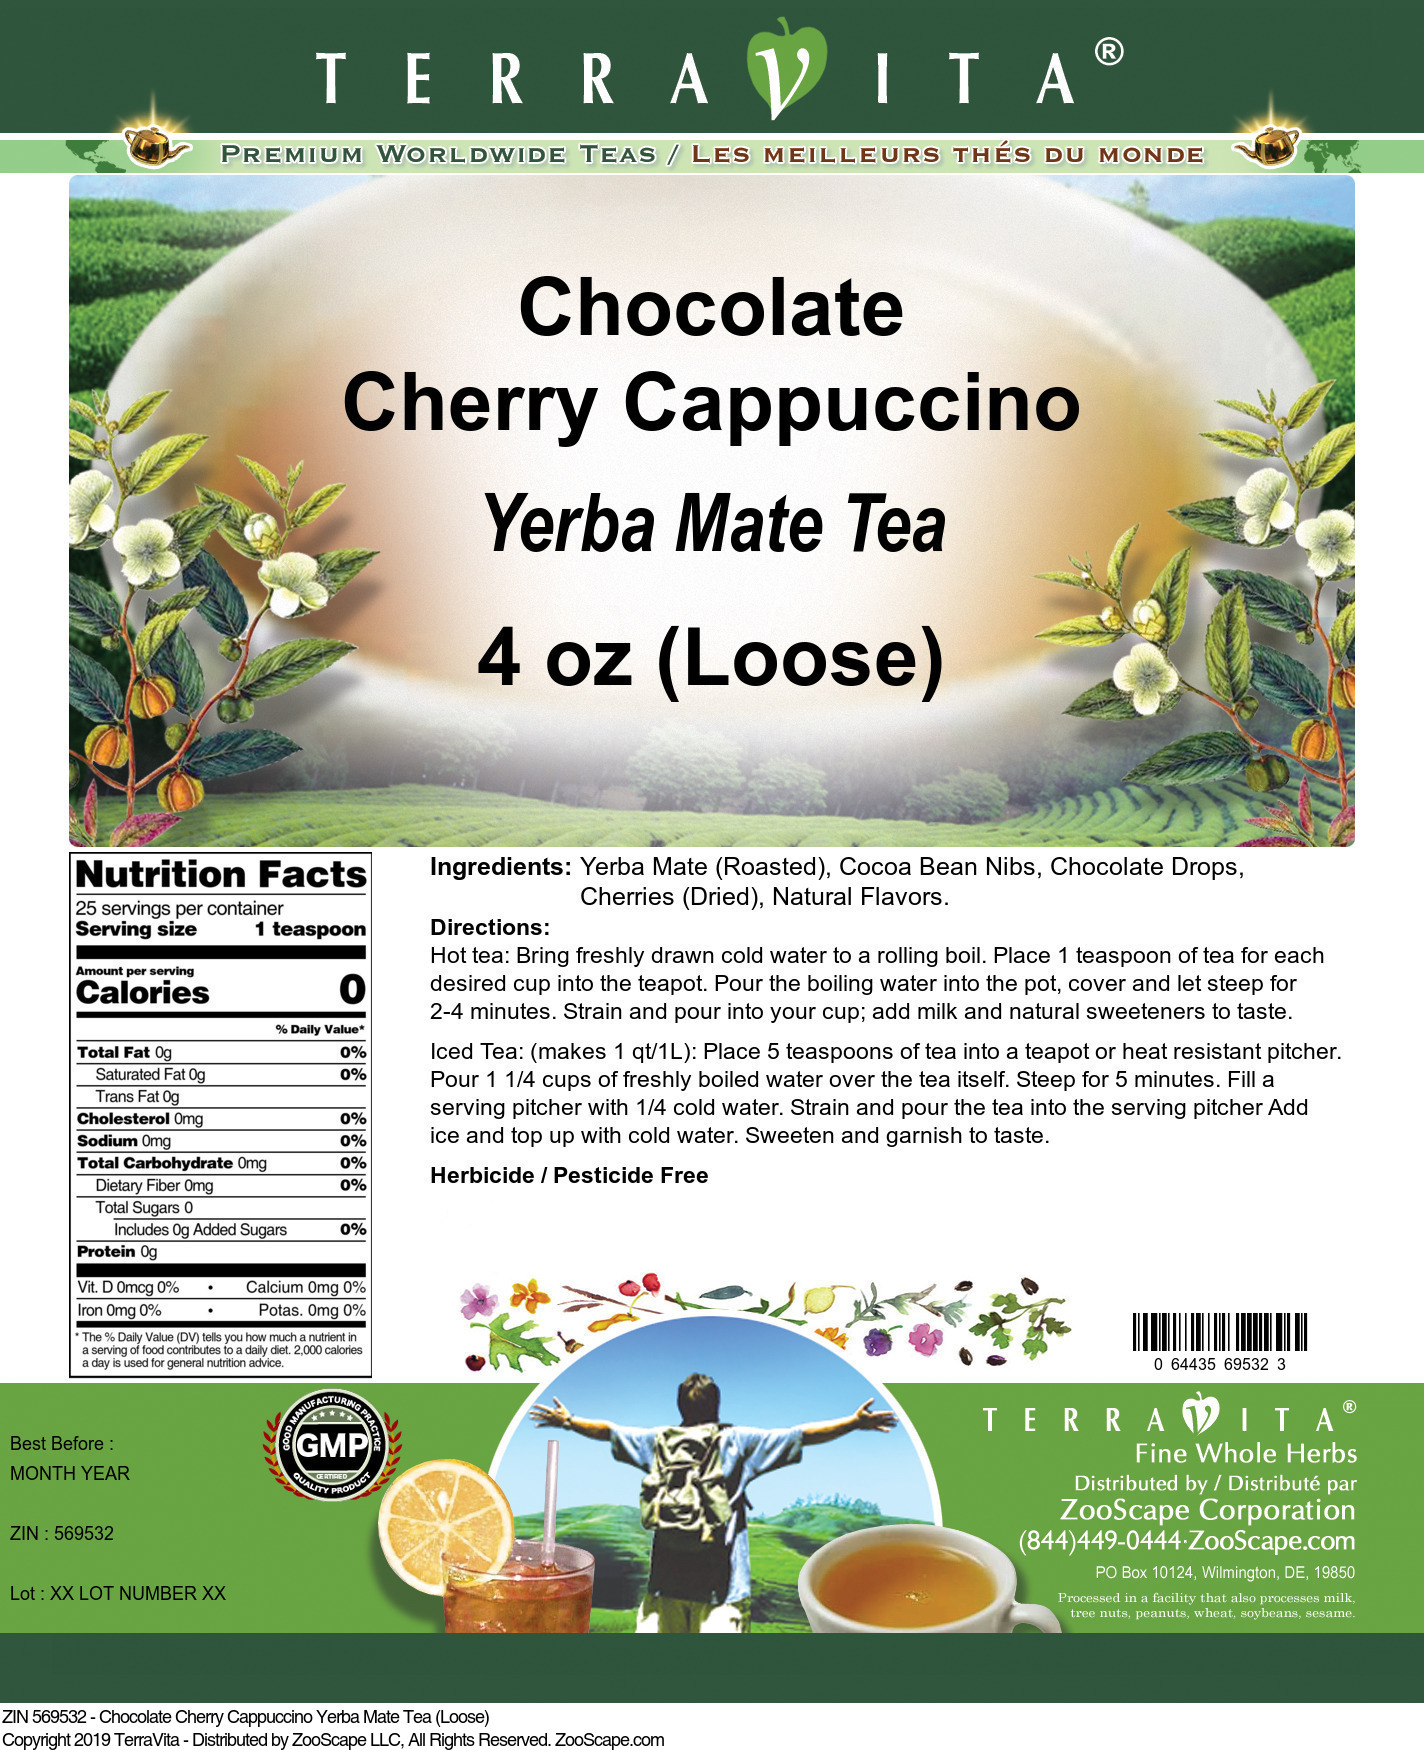 Chocolate Cherry Cappuccino Yerba Mate Tea (Loose) - Label